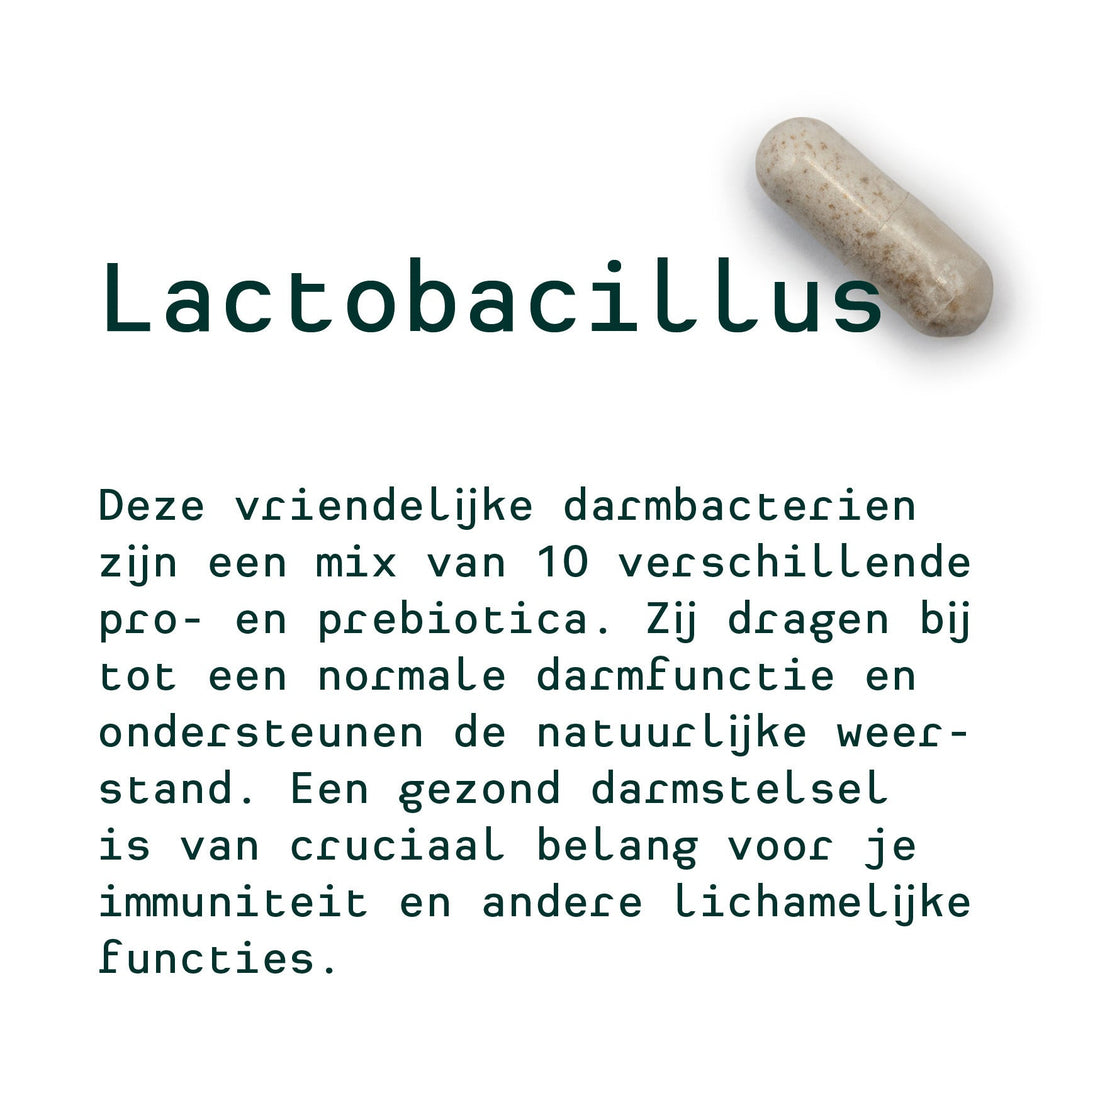 Metis Personalised van Cindy (Bamboe & Olijfblad, Lactobacillus, Transit)